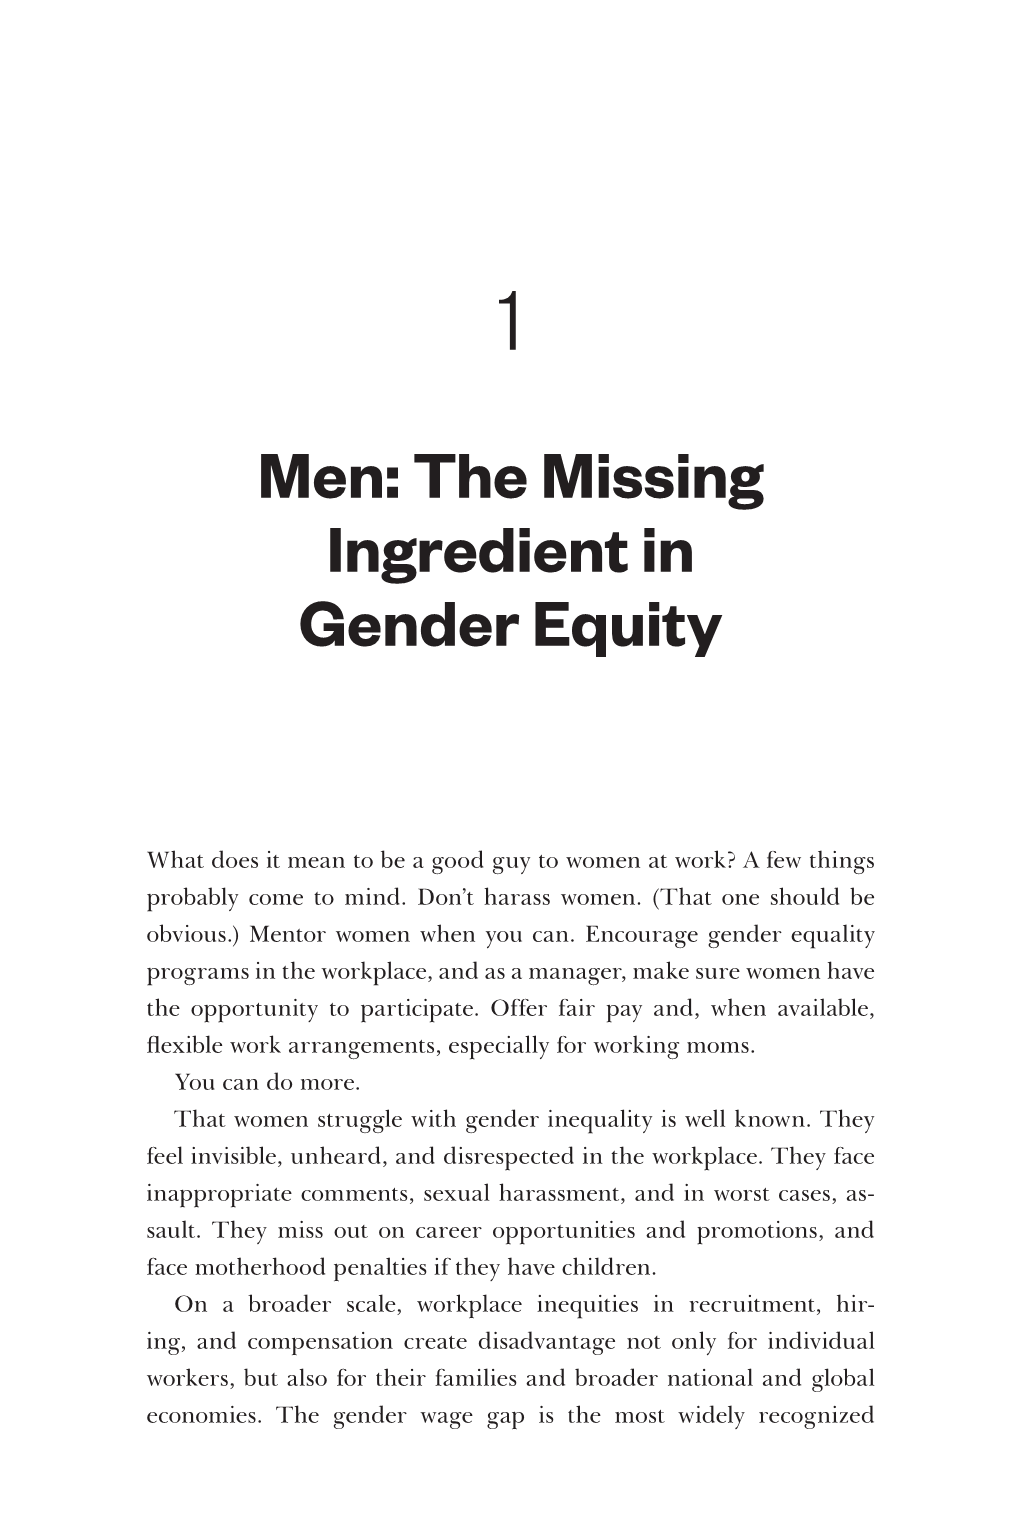 Men: the Missing Ingredient in Gender Equity